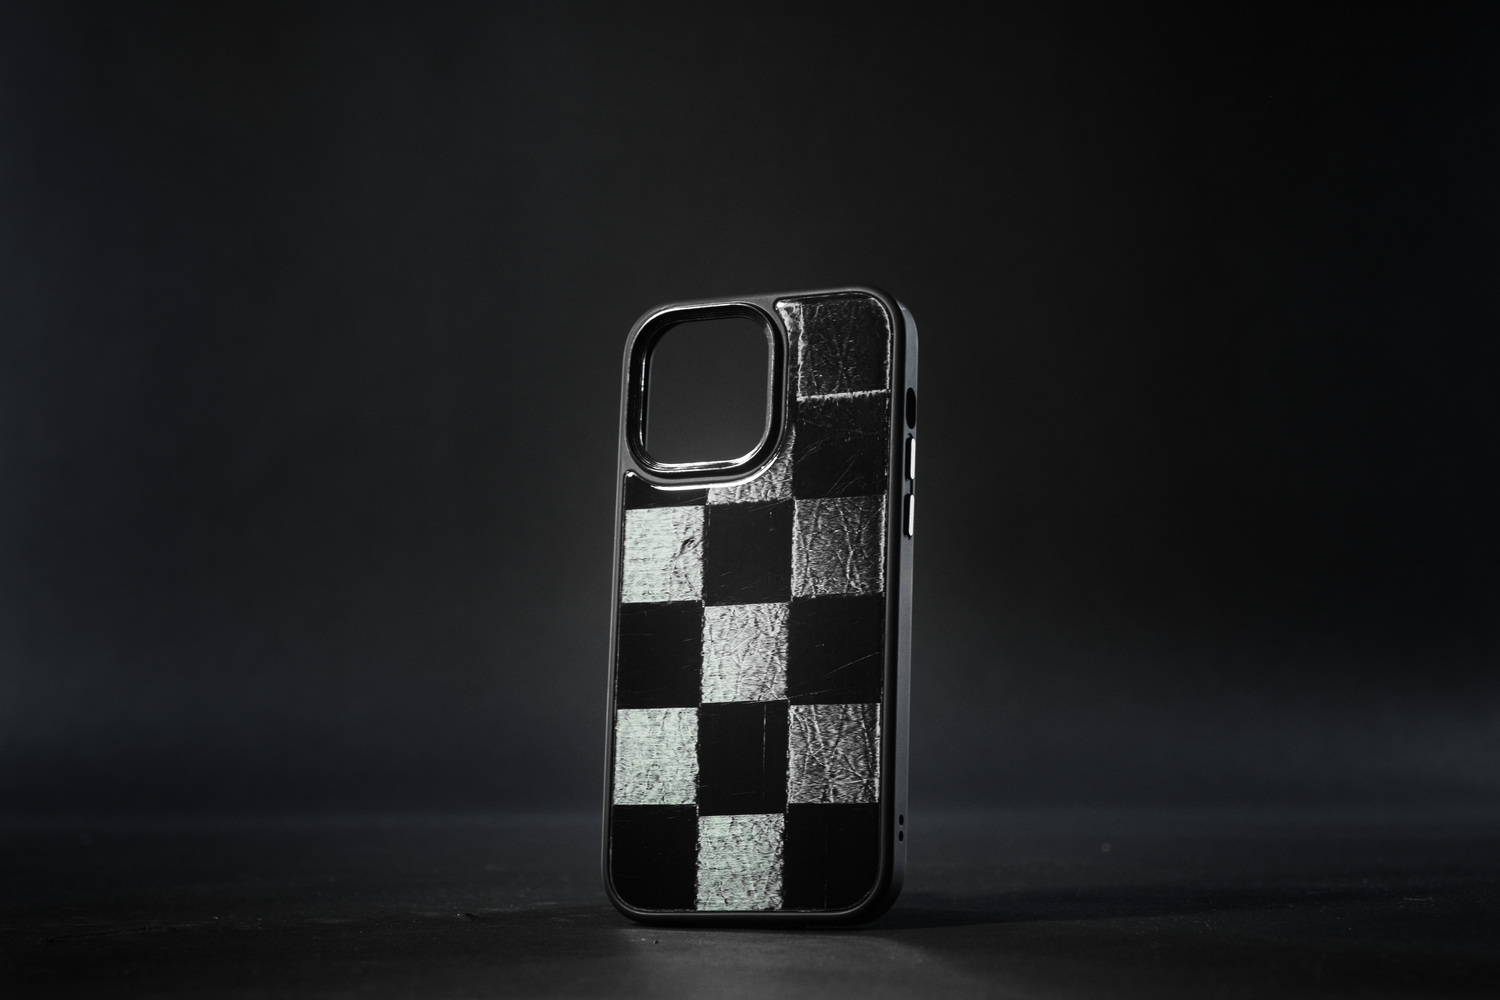 Chessboard Carbon Case – PolarFiber